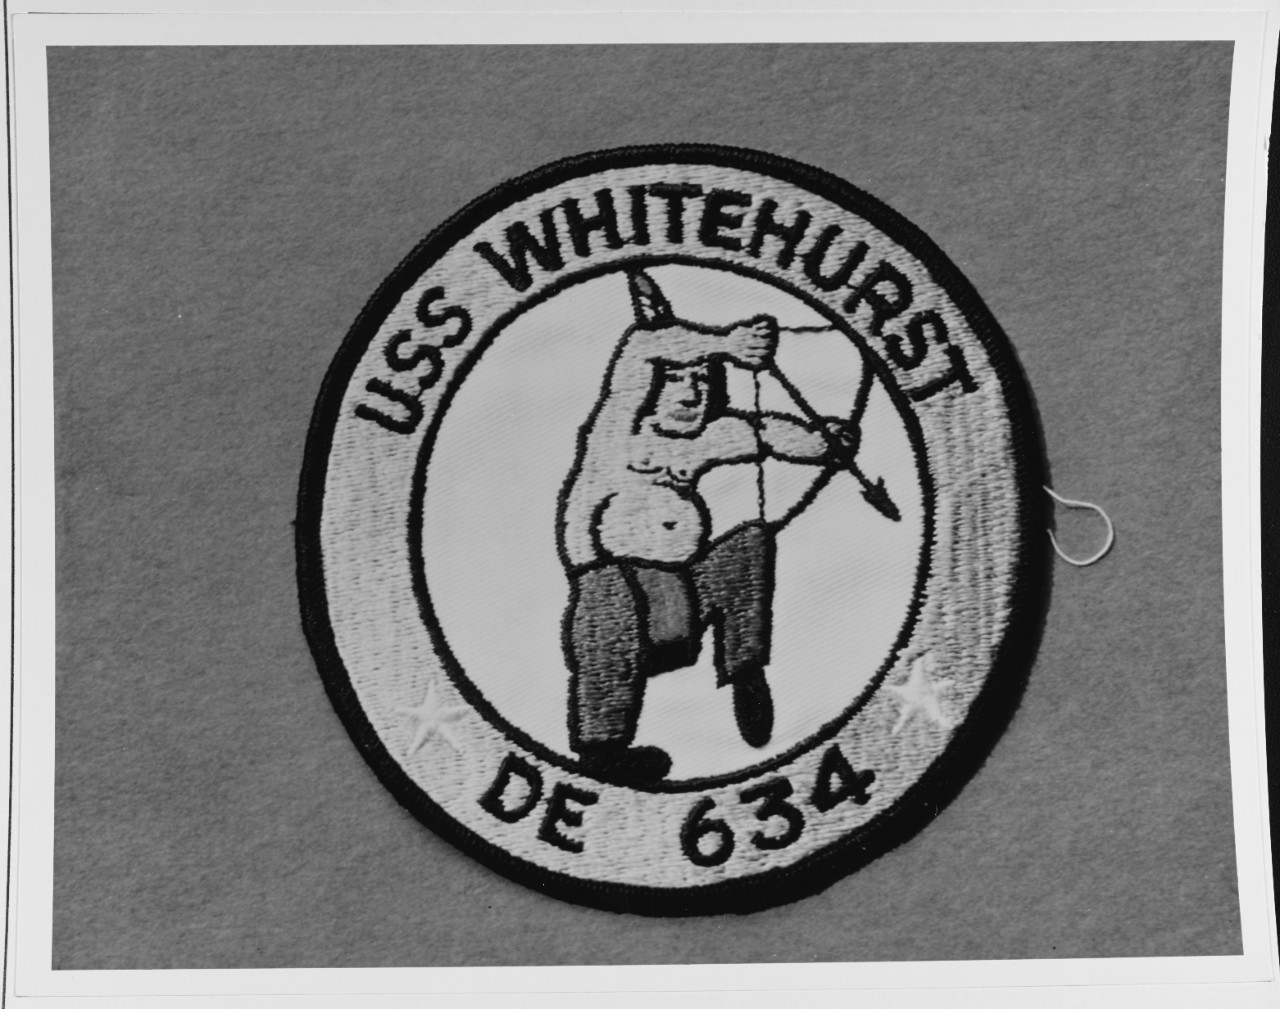 Insignia:  USS WHITEHURST (DE-634)